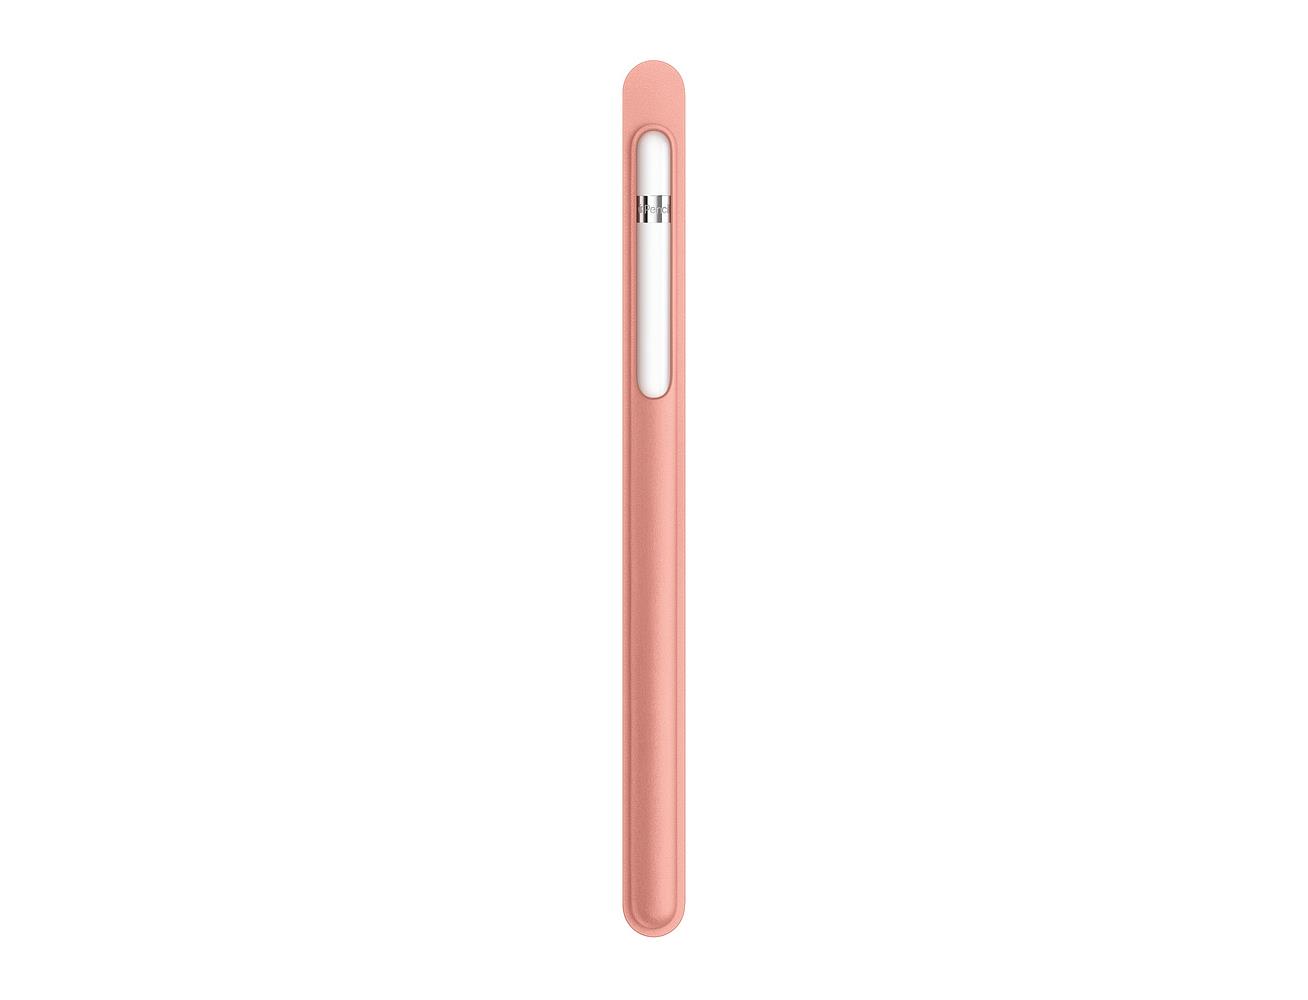 Apple Pencil Case - Soft Pink| Blink Kuwait